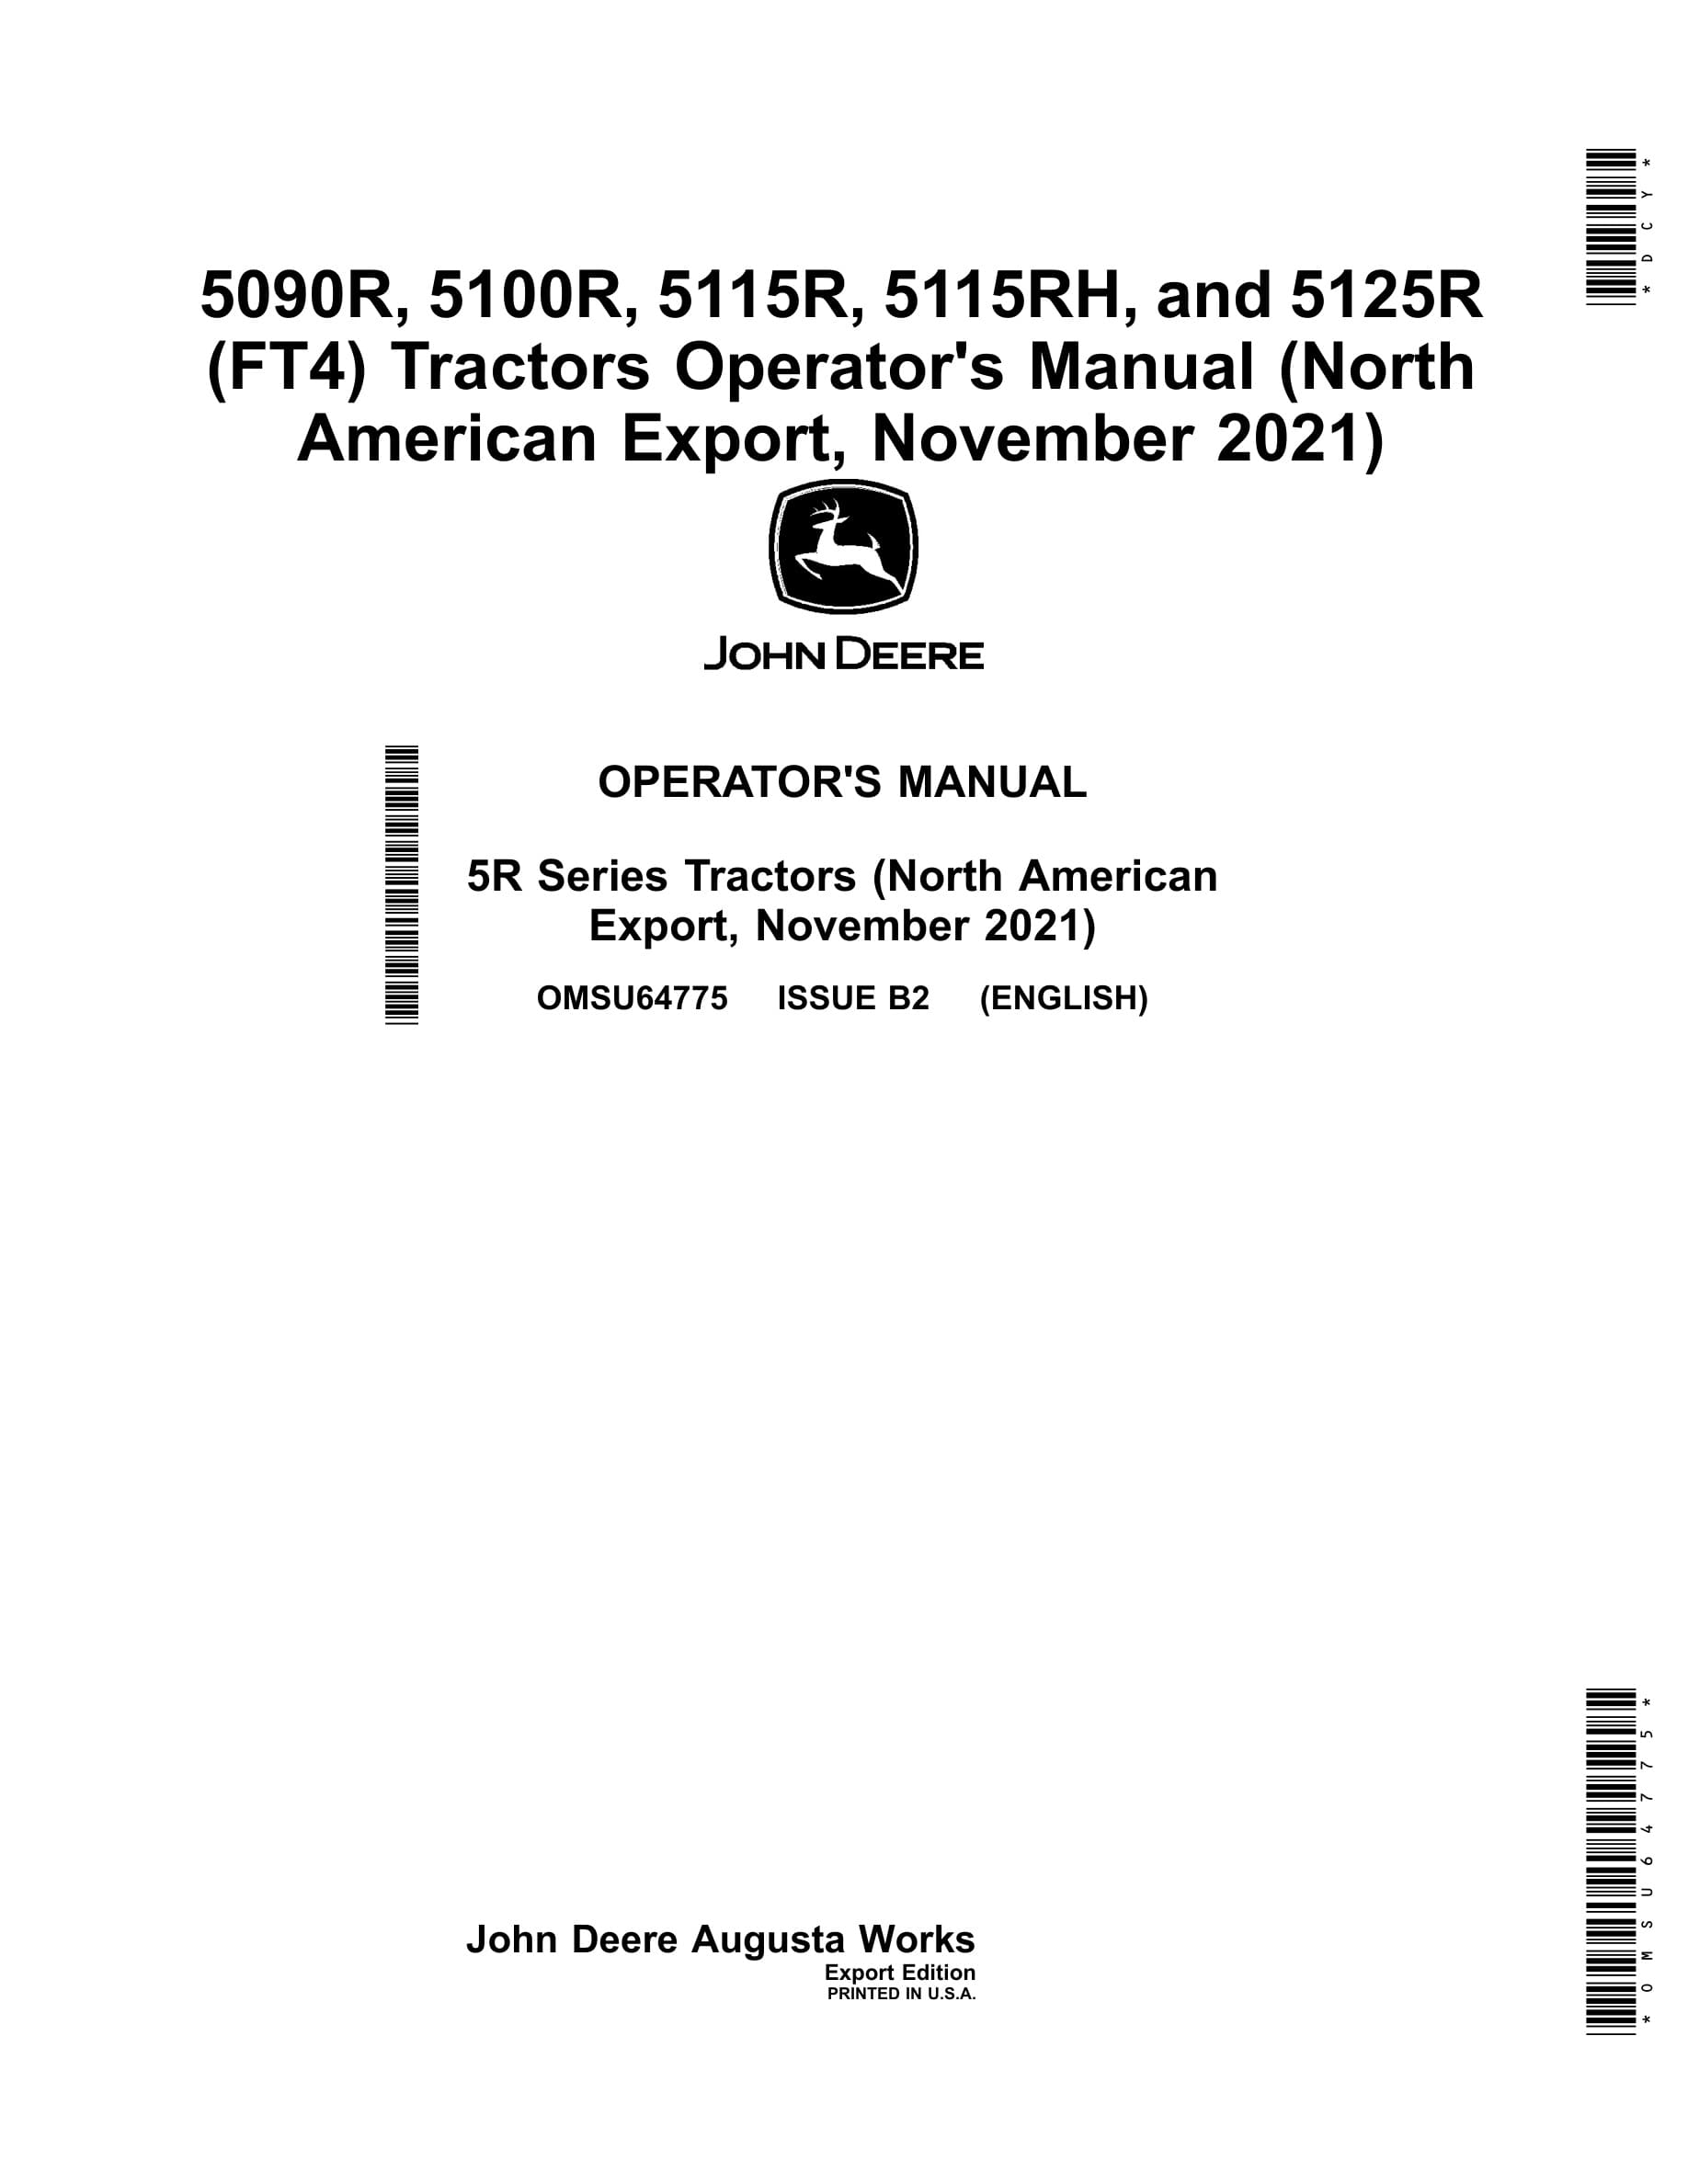 John Deere 5090r, 5100r, 5115r, 5115rh, And 5125r (ft4) Tractors Operator Manuals OMSU64775-1